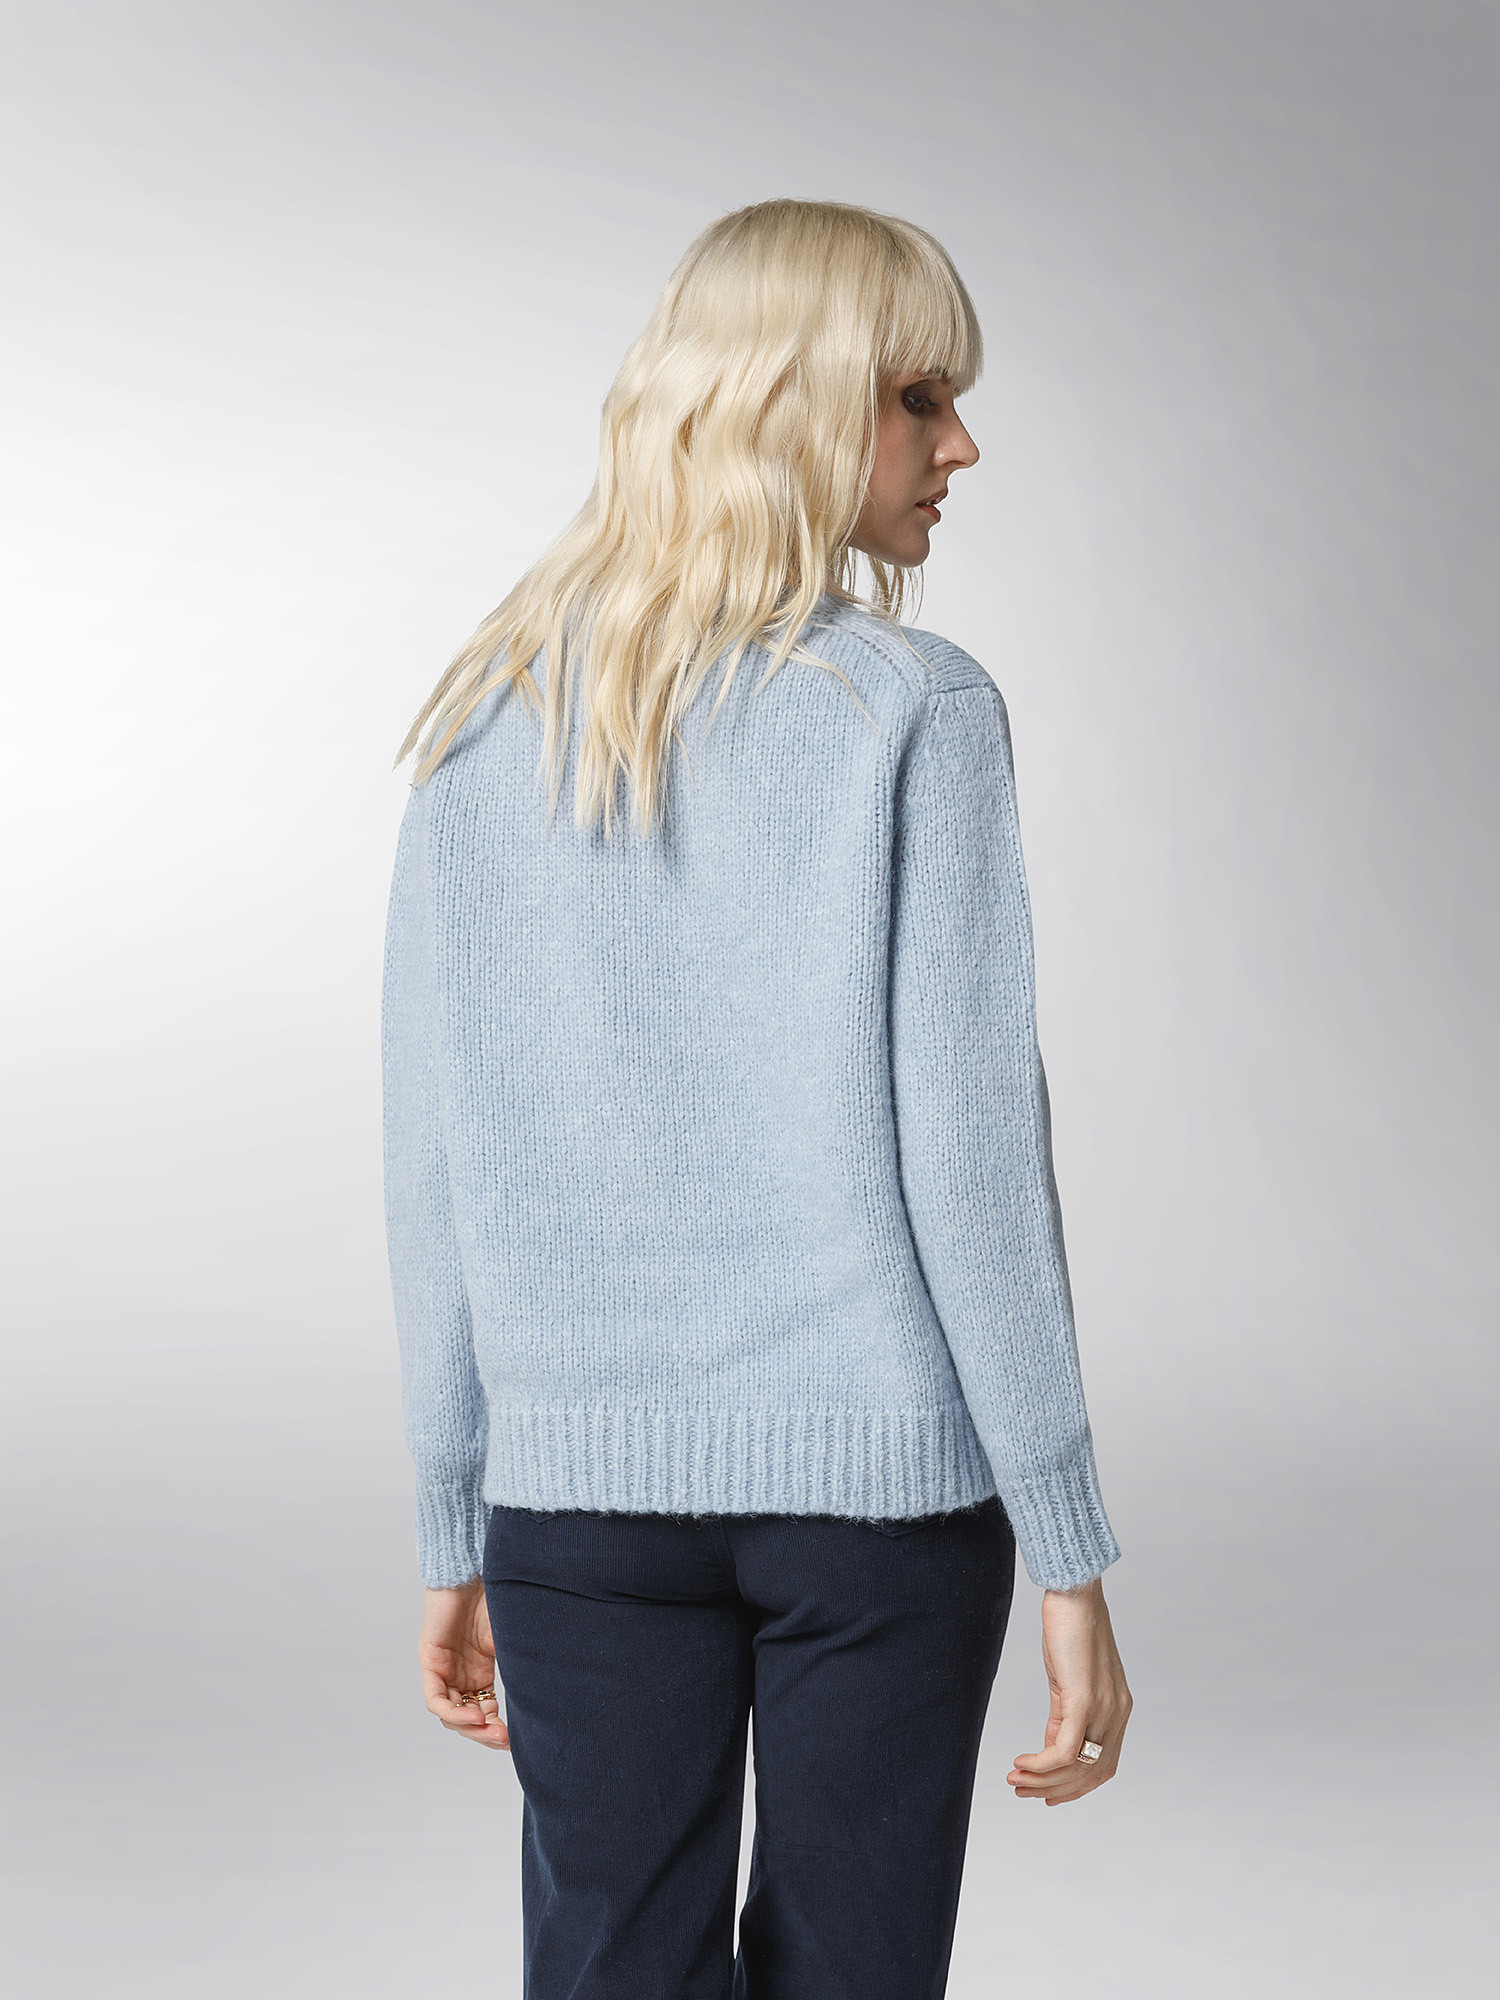 K Collection - Crewneck sweater, Light Blue, large image number 6